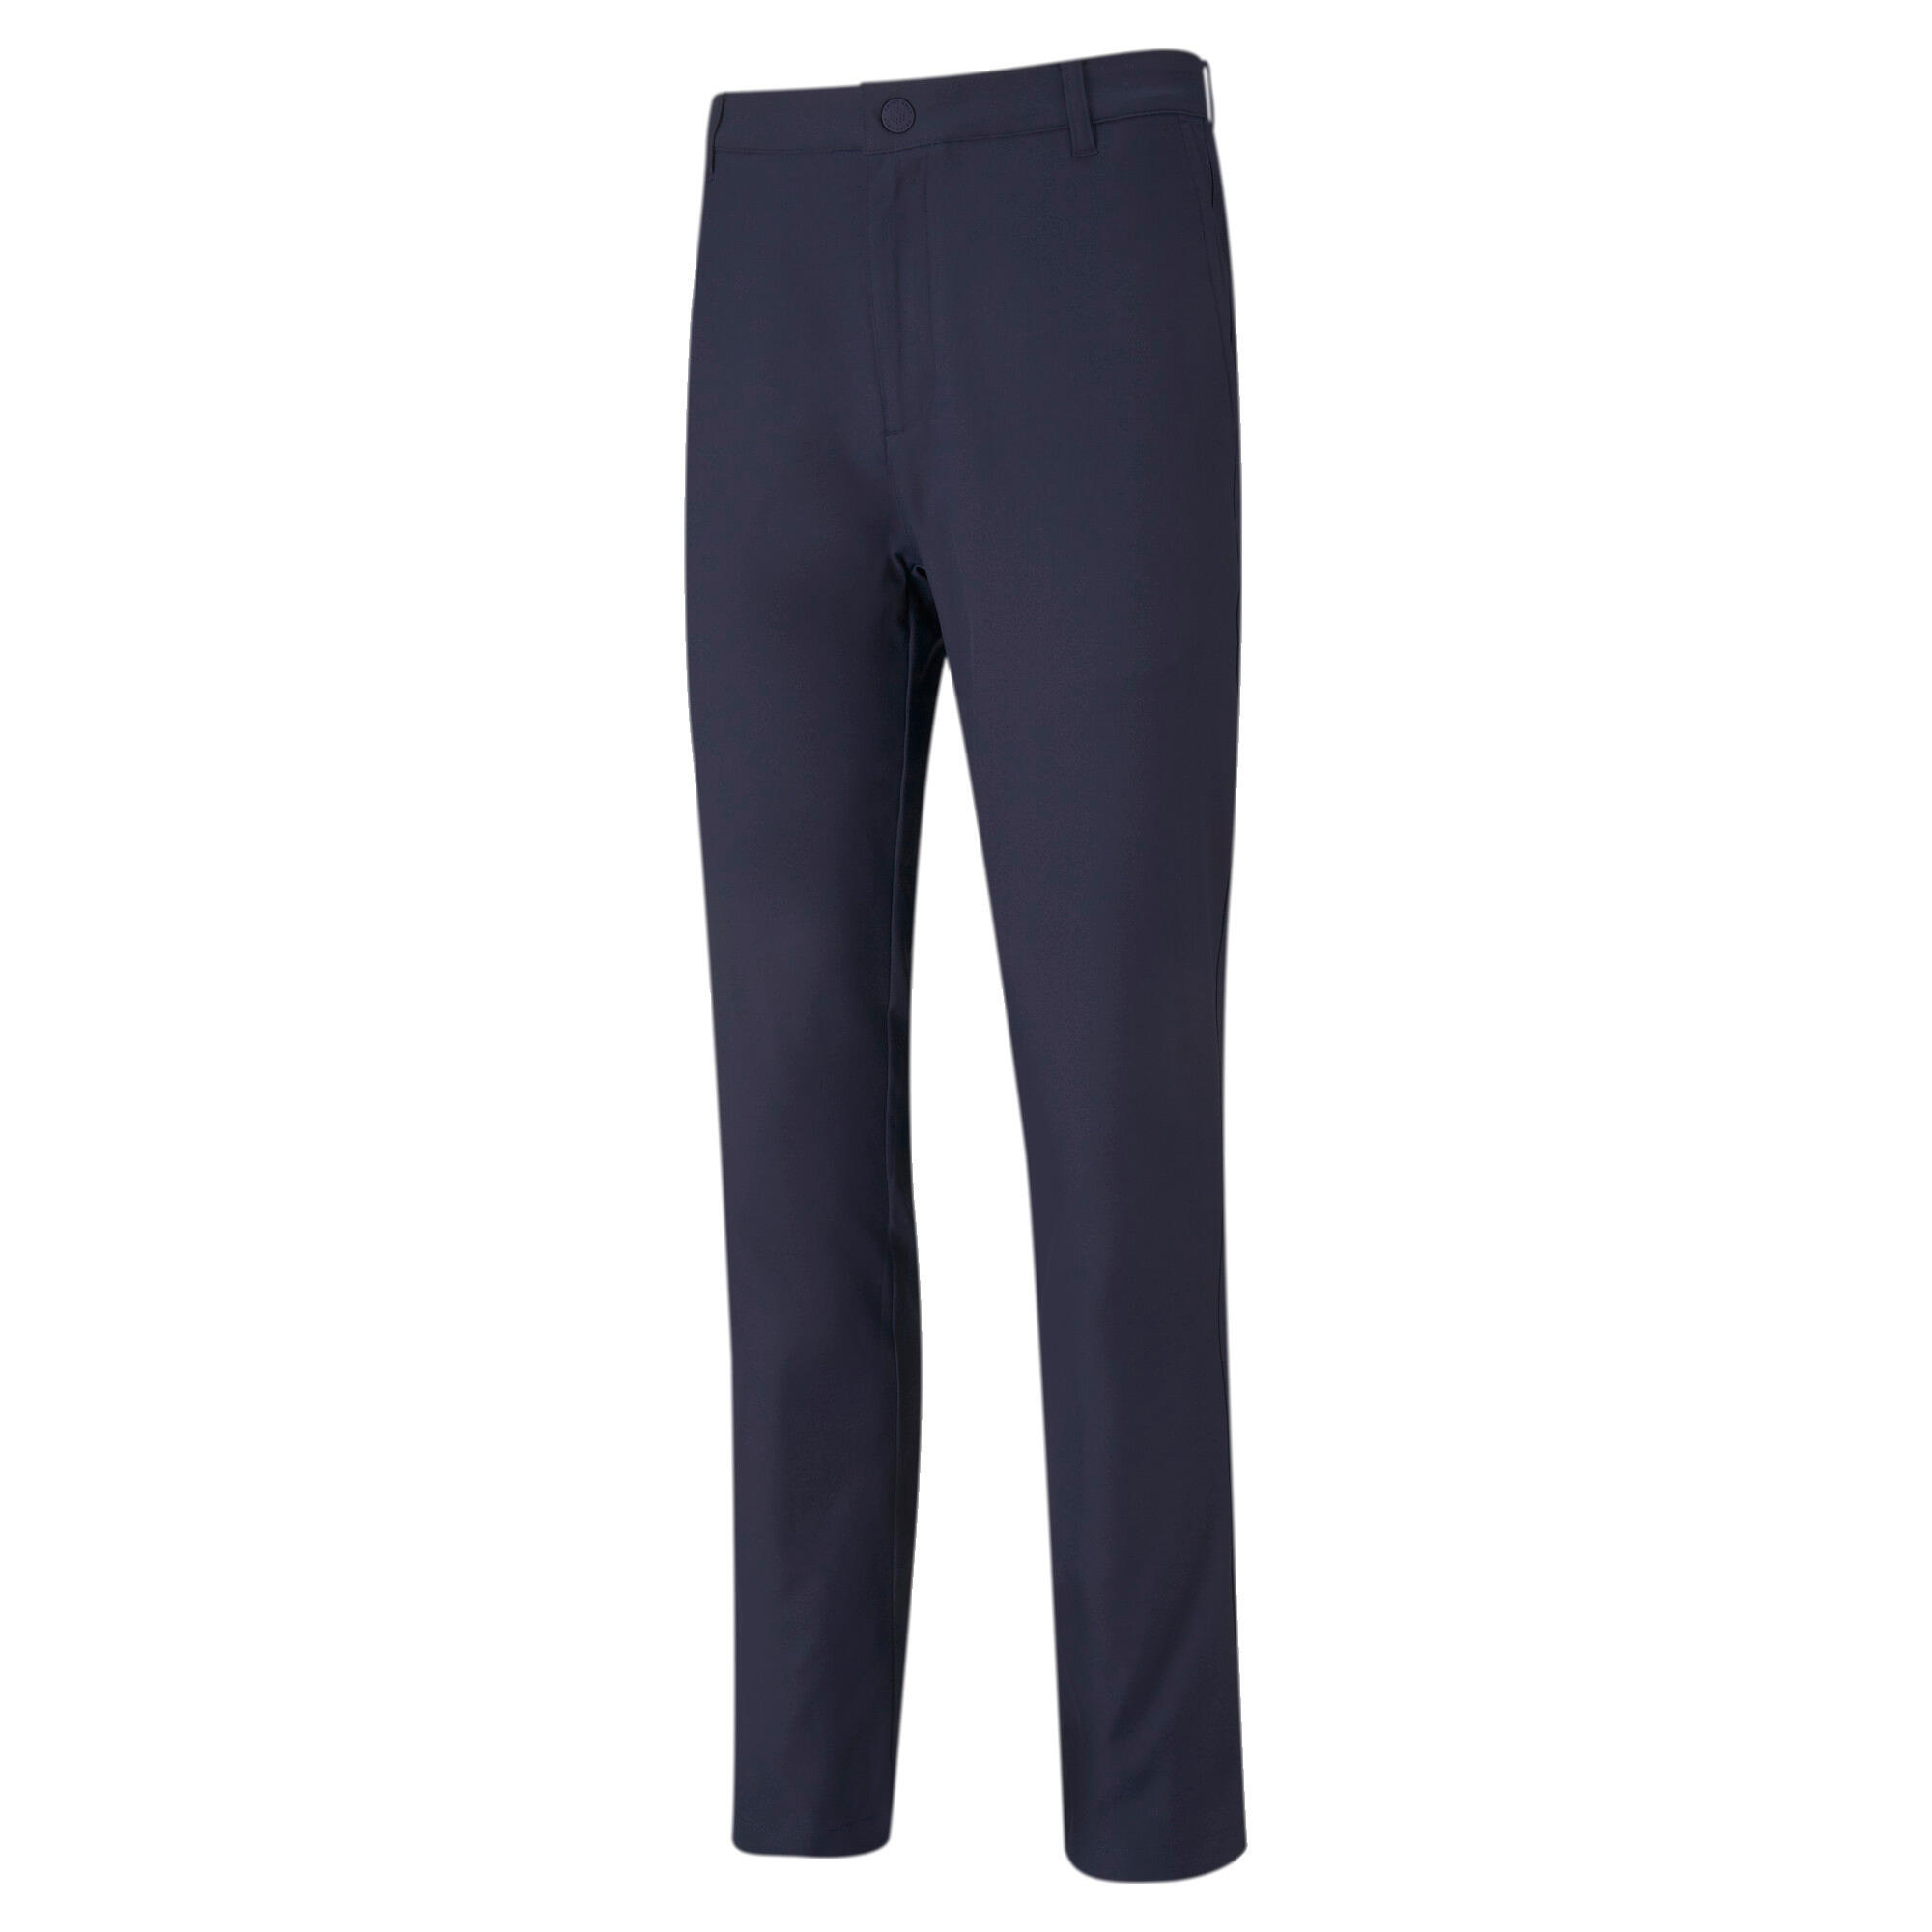 PUMA Mens Jackpot Tailored Golf Pants Trousers - Navy Blazer 3/4